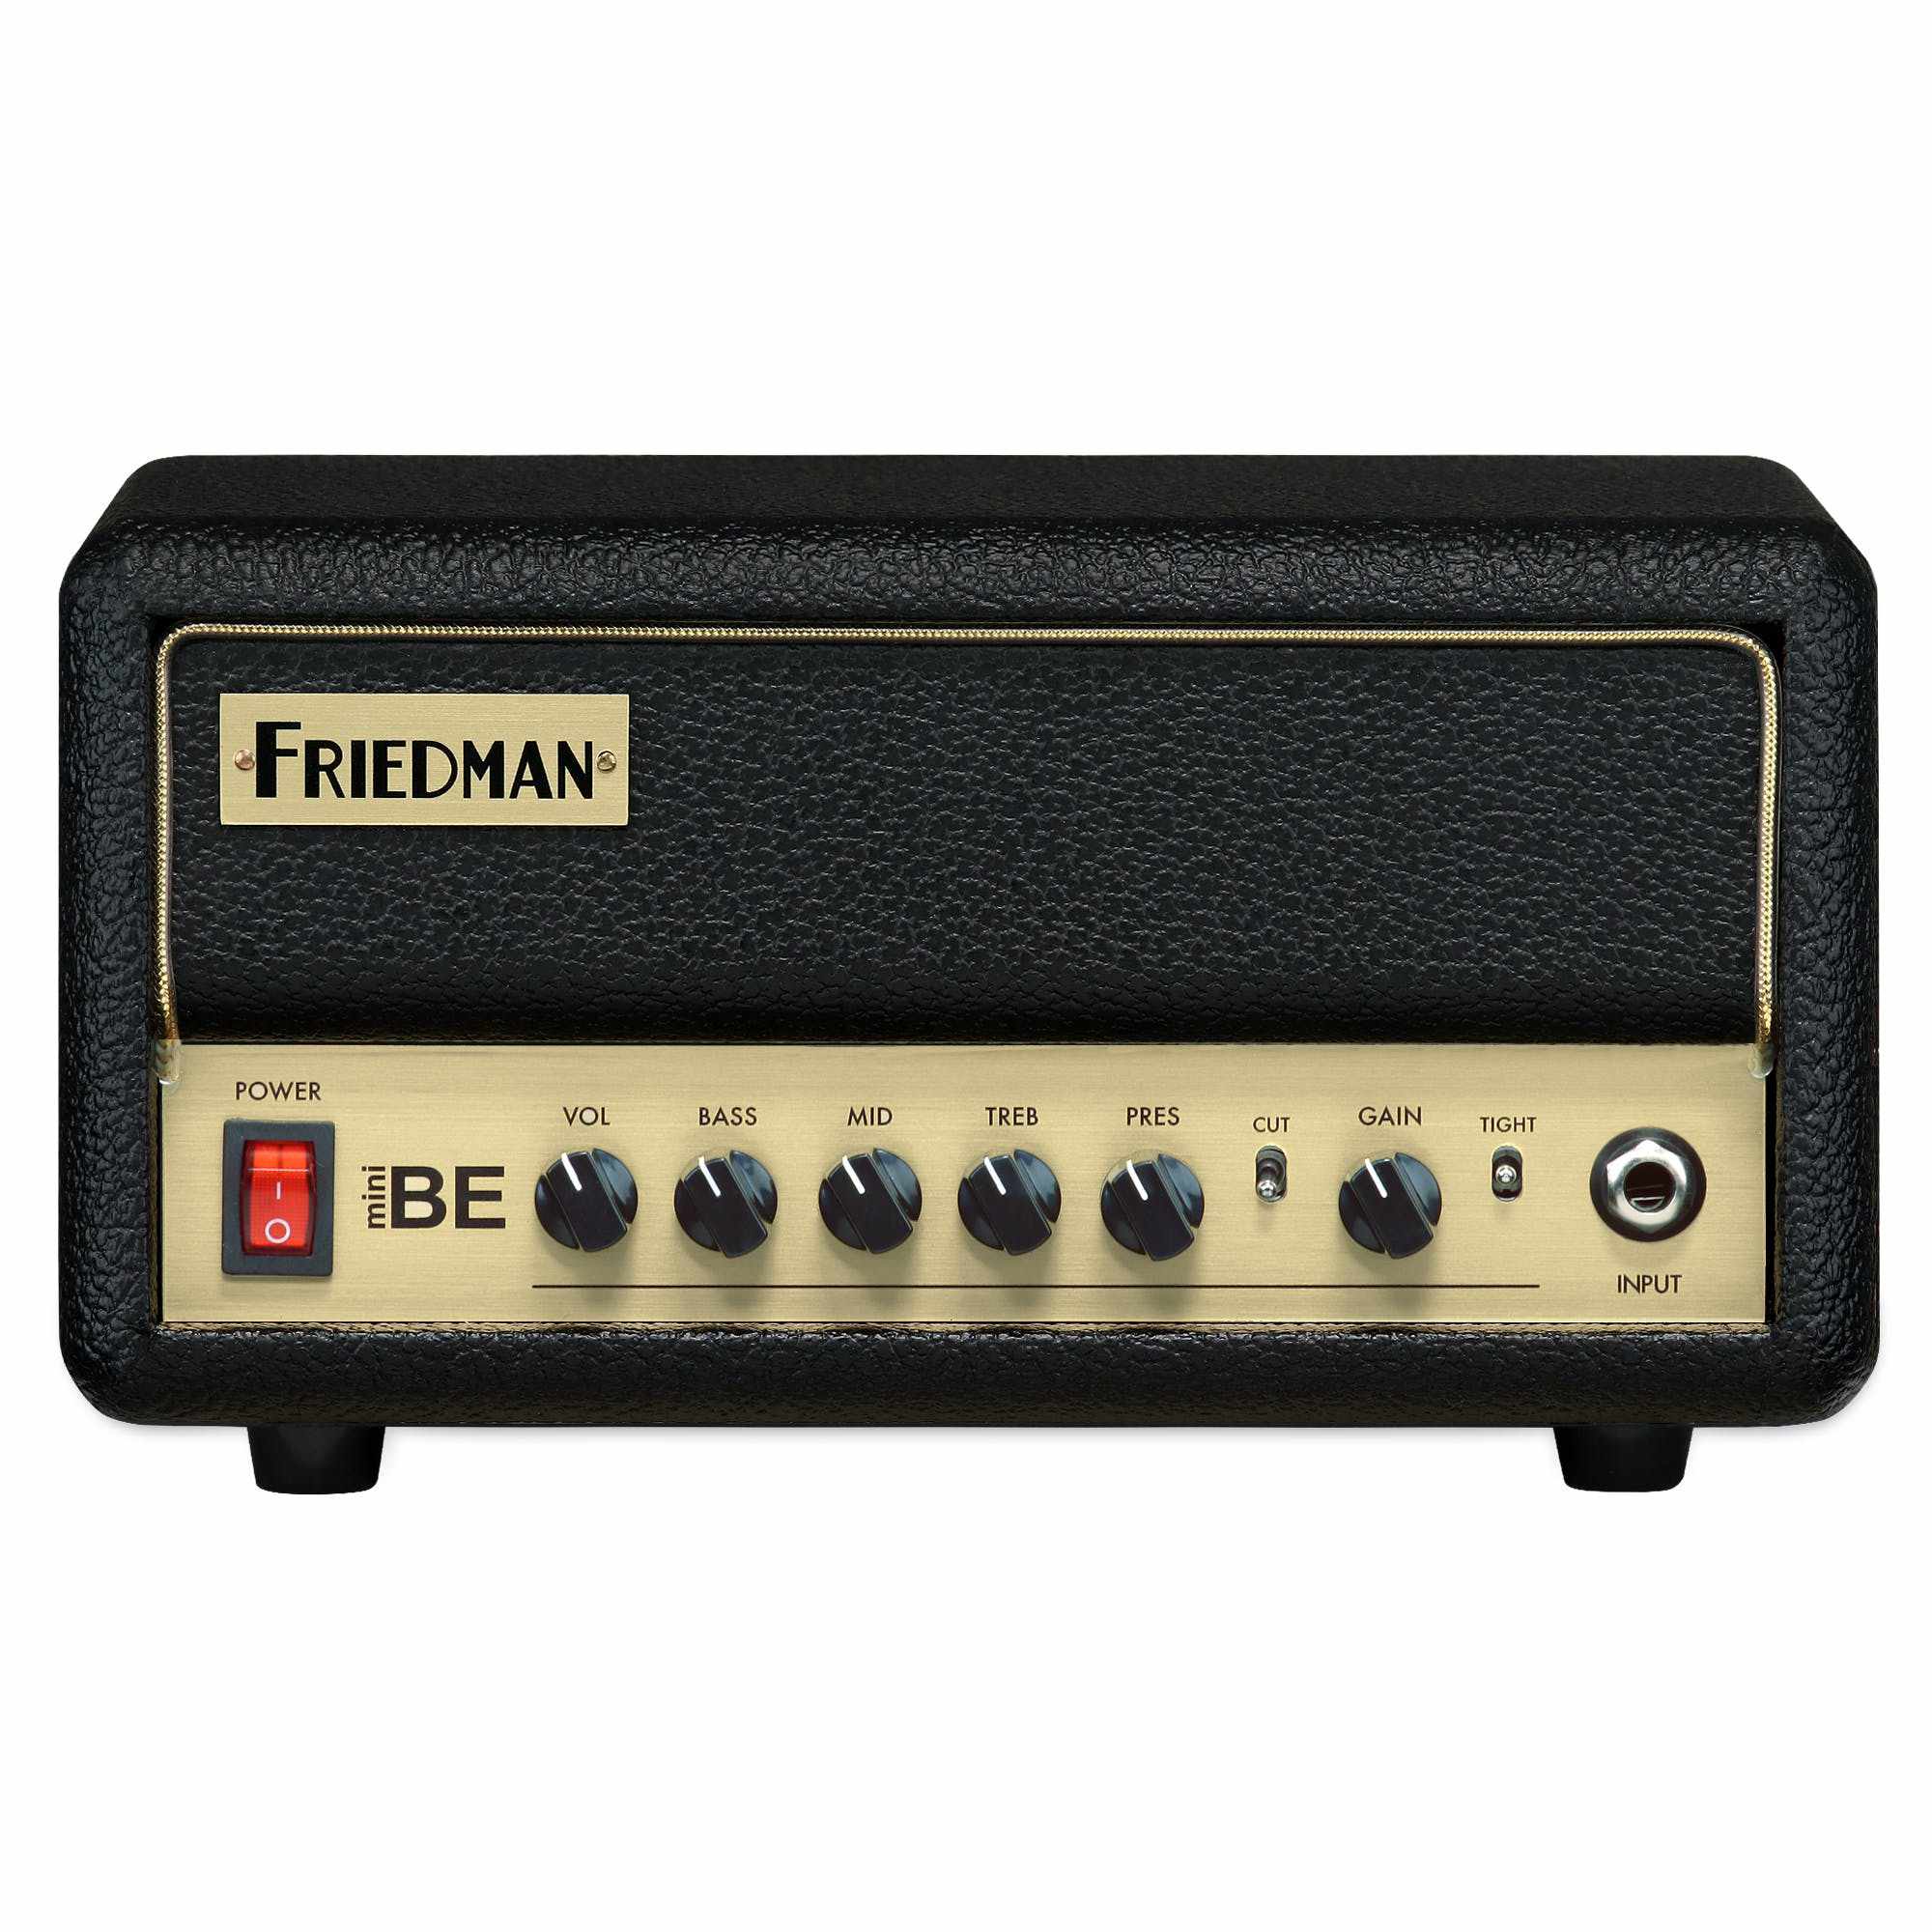 Friedman Amplifier Friedman Brown Eye BE MINI AMP